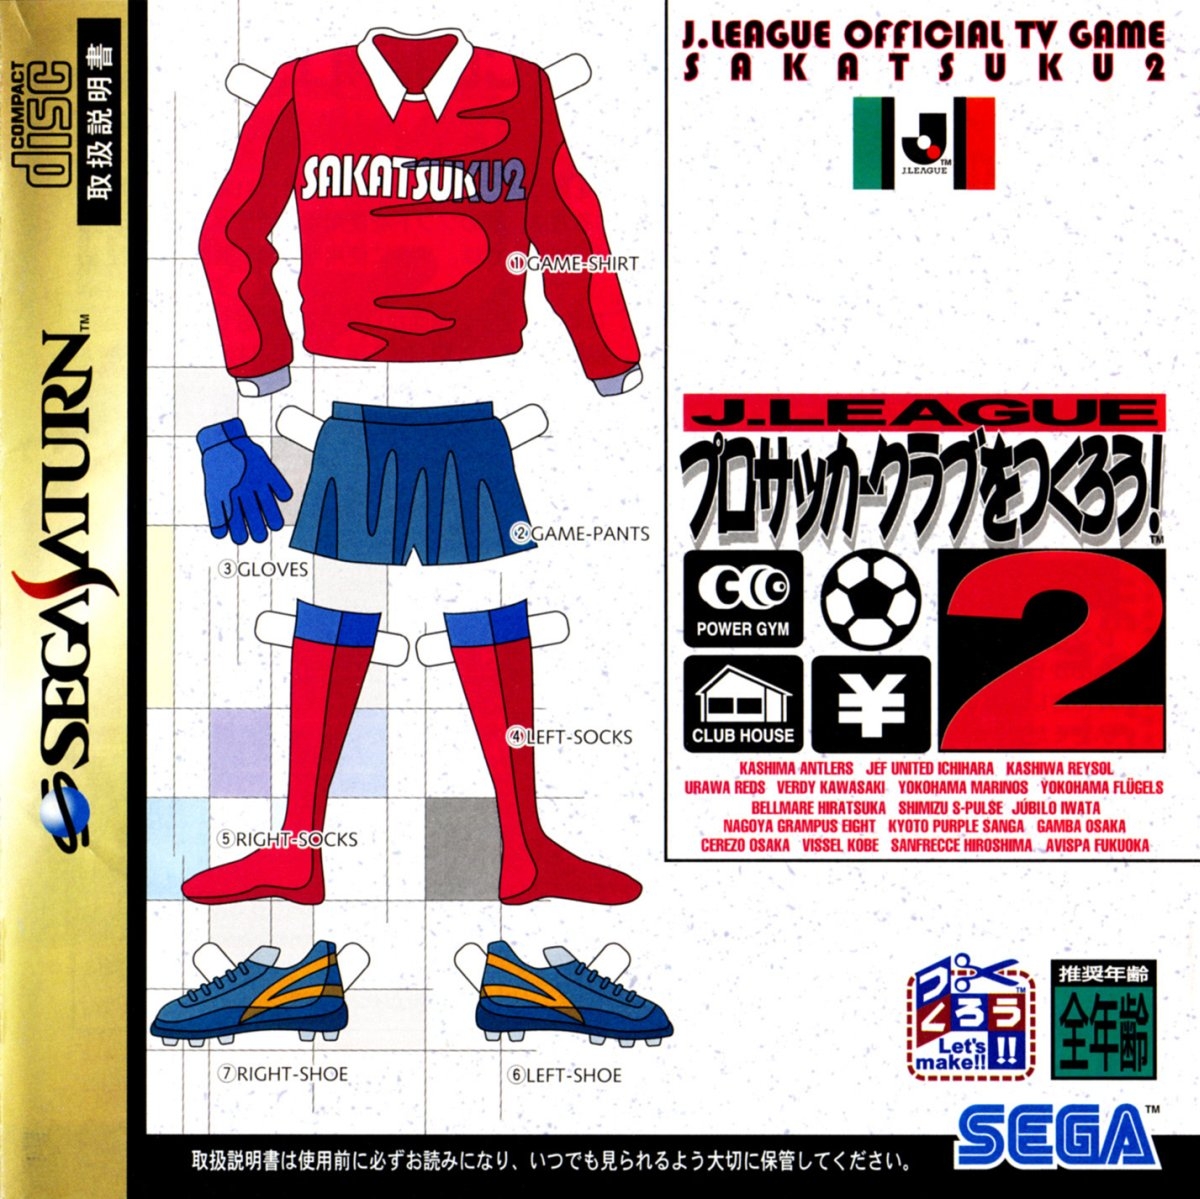 Capa do jogo J.League Pro Soccer Club o Tsukurou! 2